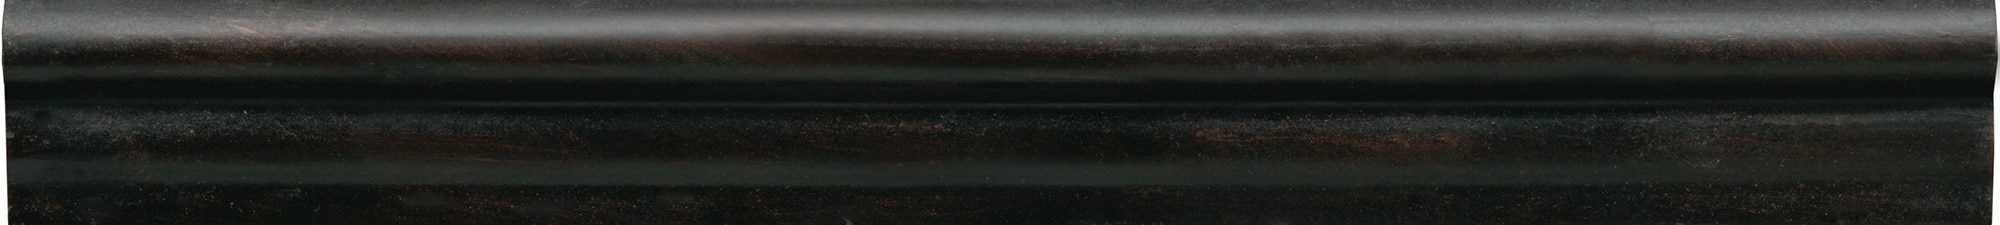 Oil Rub Bronze, Chair Rail, 1/2X12, Sati